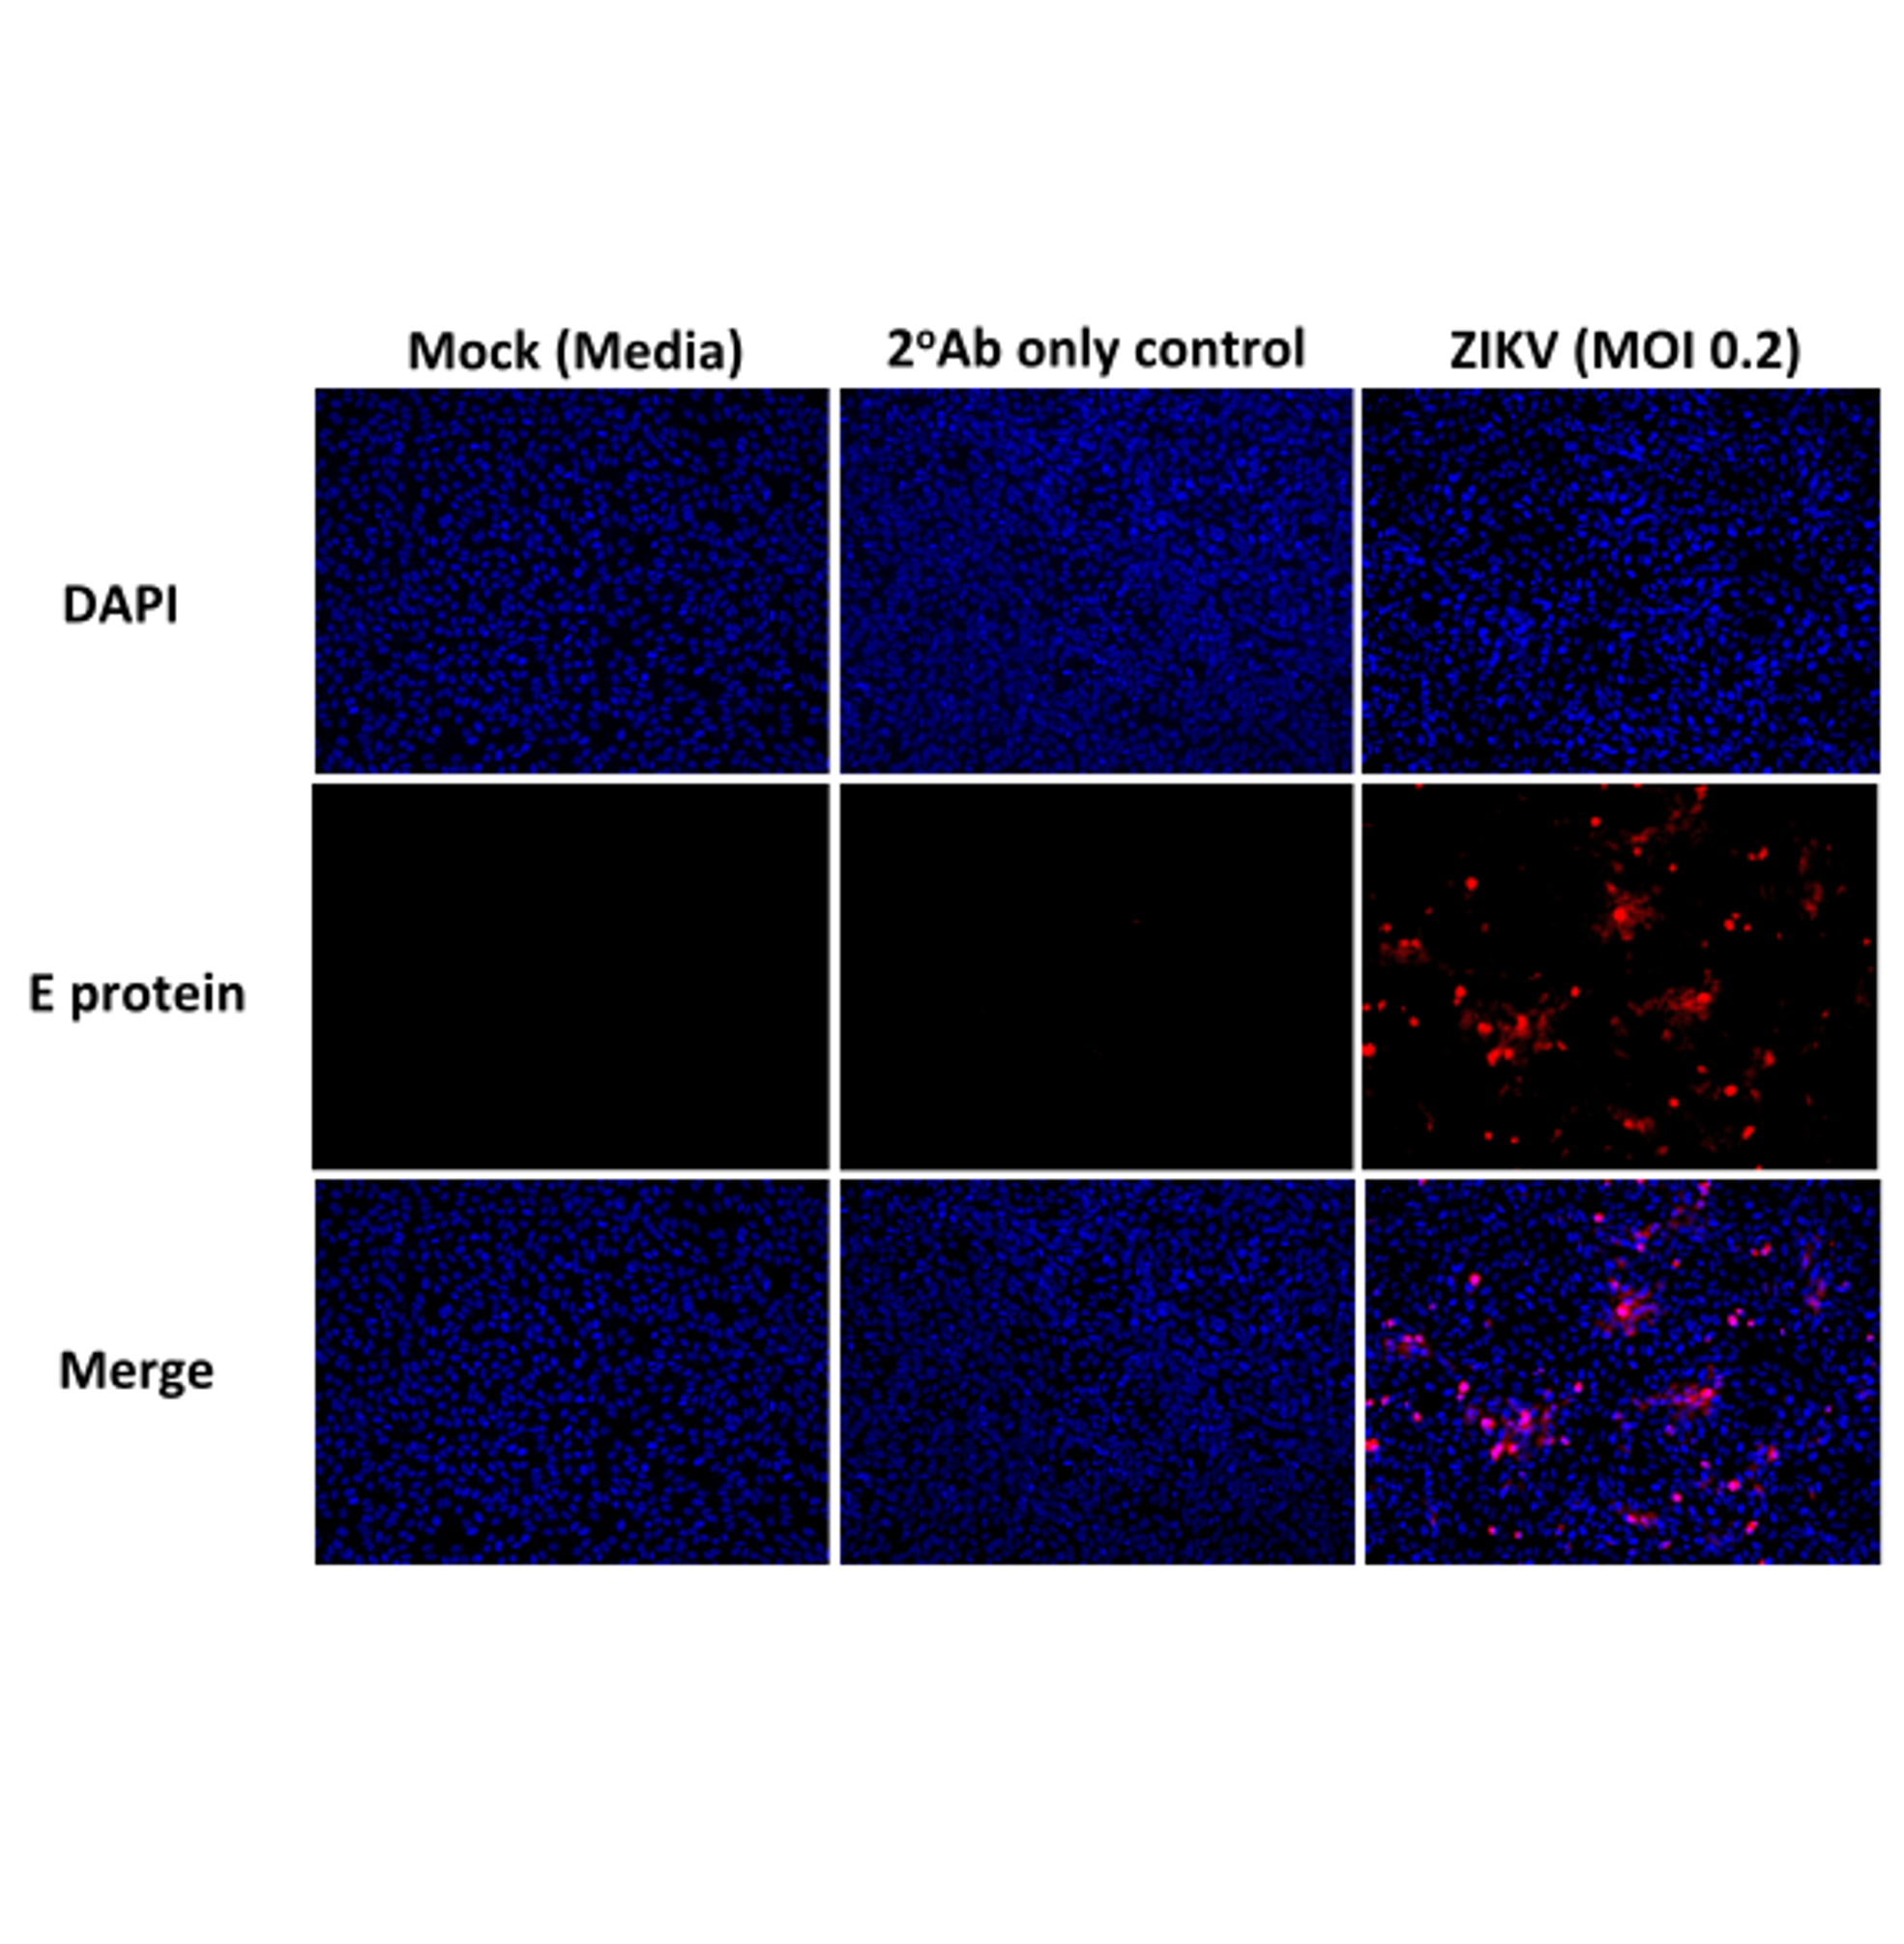 Immunofluorescent assay with strong signal using the anti-flavivirus clone D1-4G2-4-15 (4G2)